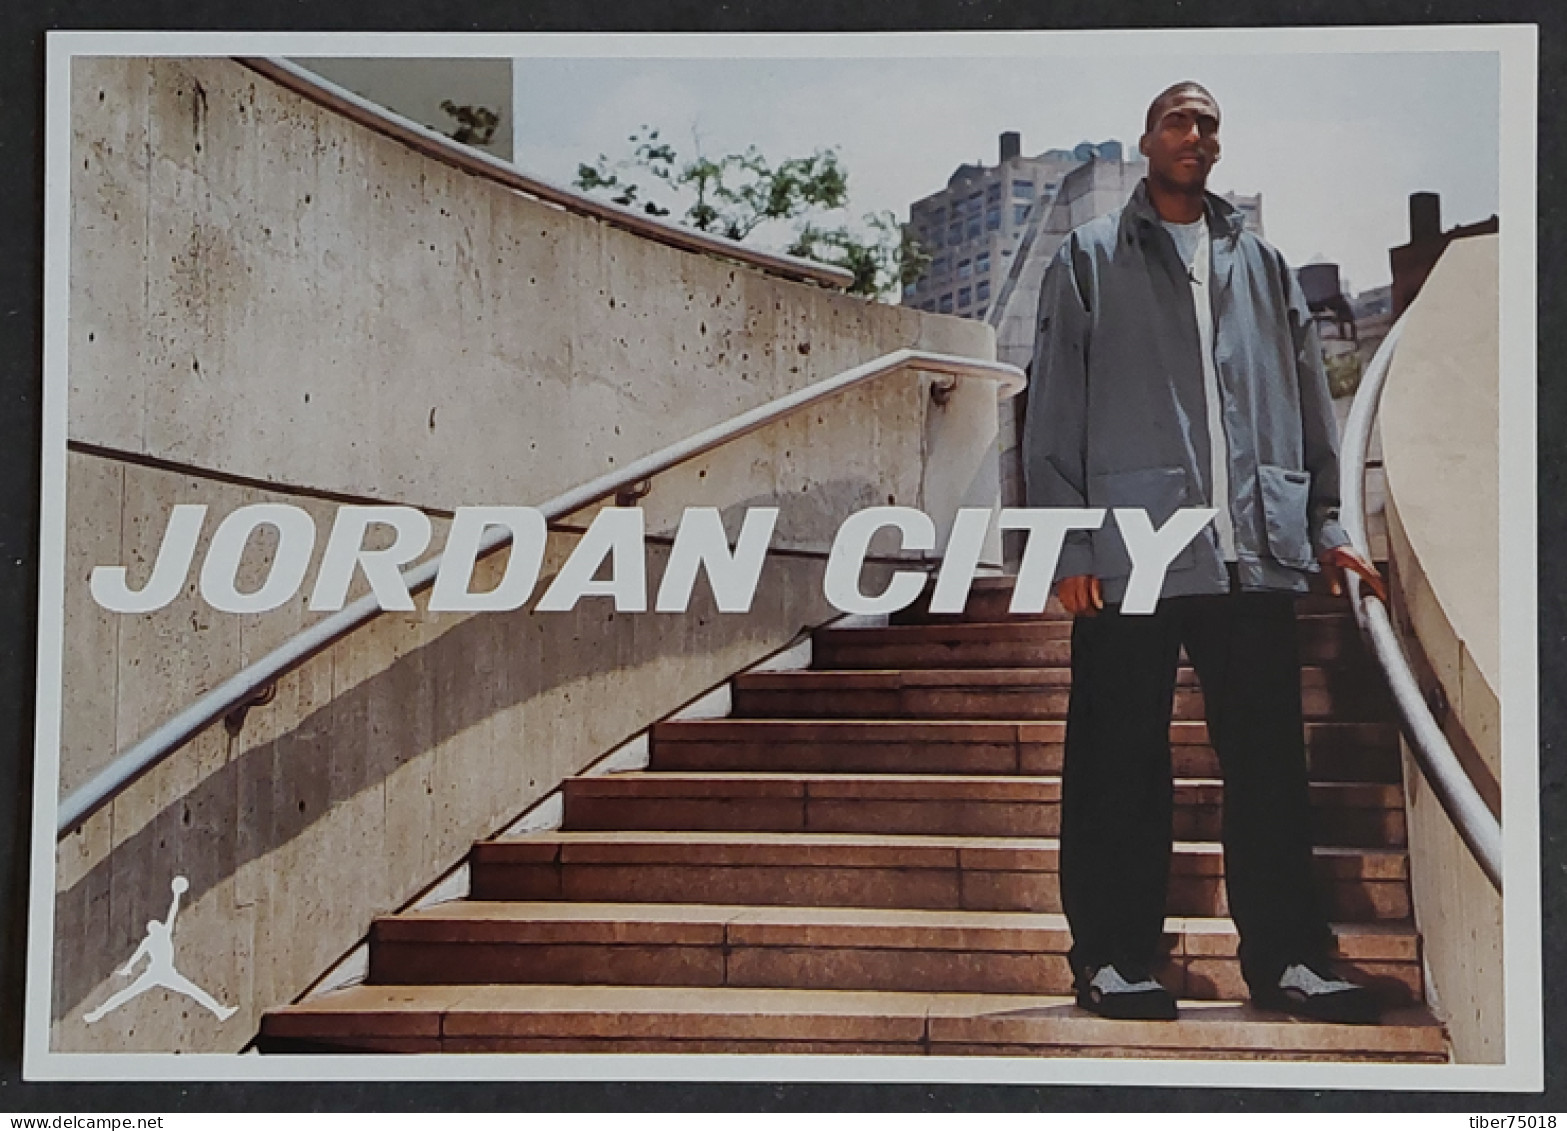 Carte Postale - Jordan City - Eddie Jones (basket-ball) Wears The 3-on-1 Fast Break Jacket - Advertising